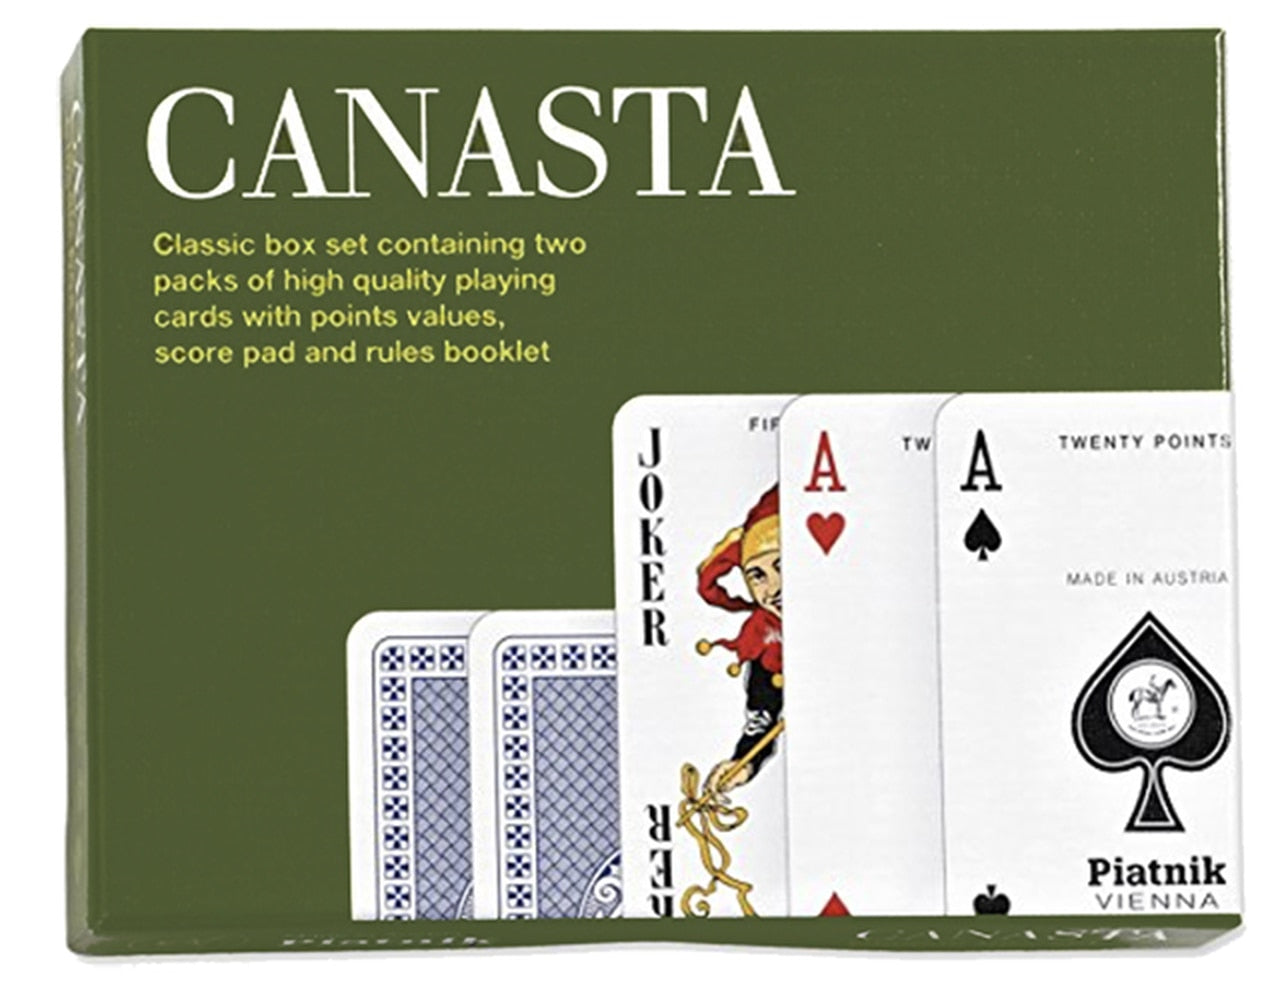 Canasta Green Box - Piatnik Playing Cards Double Deck